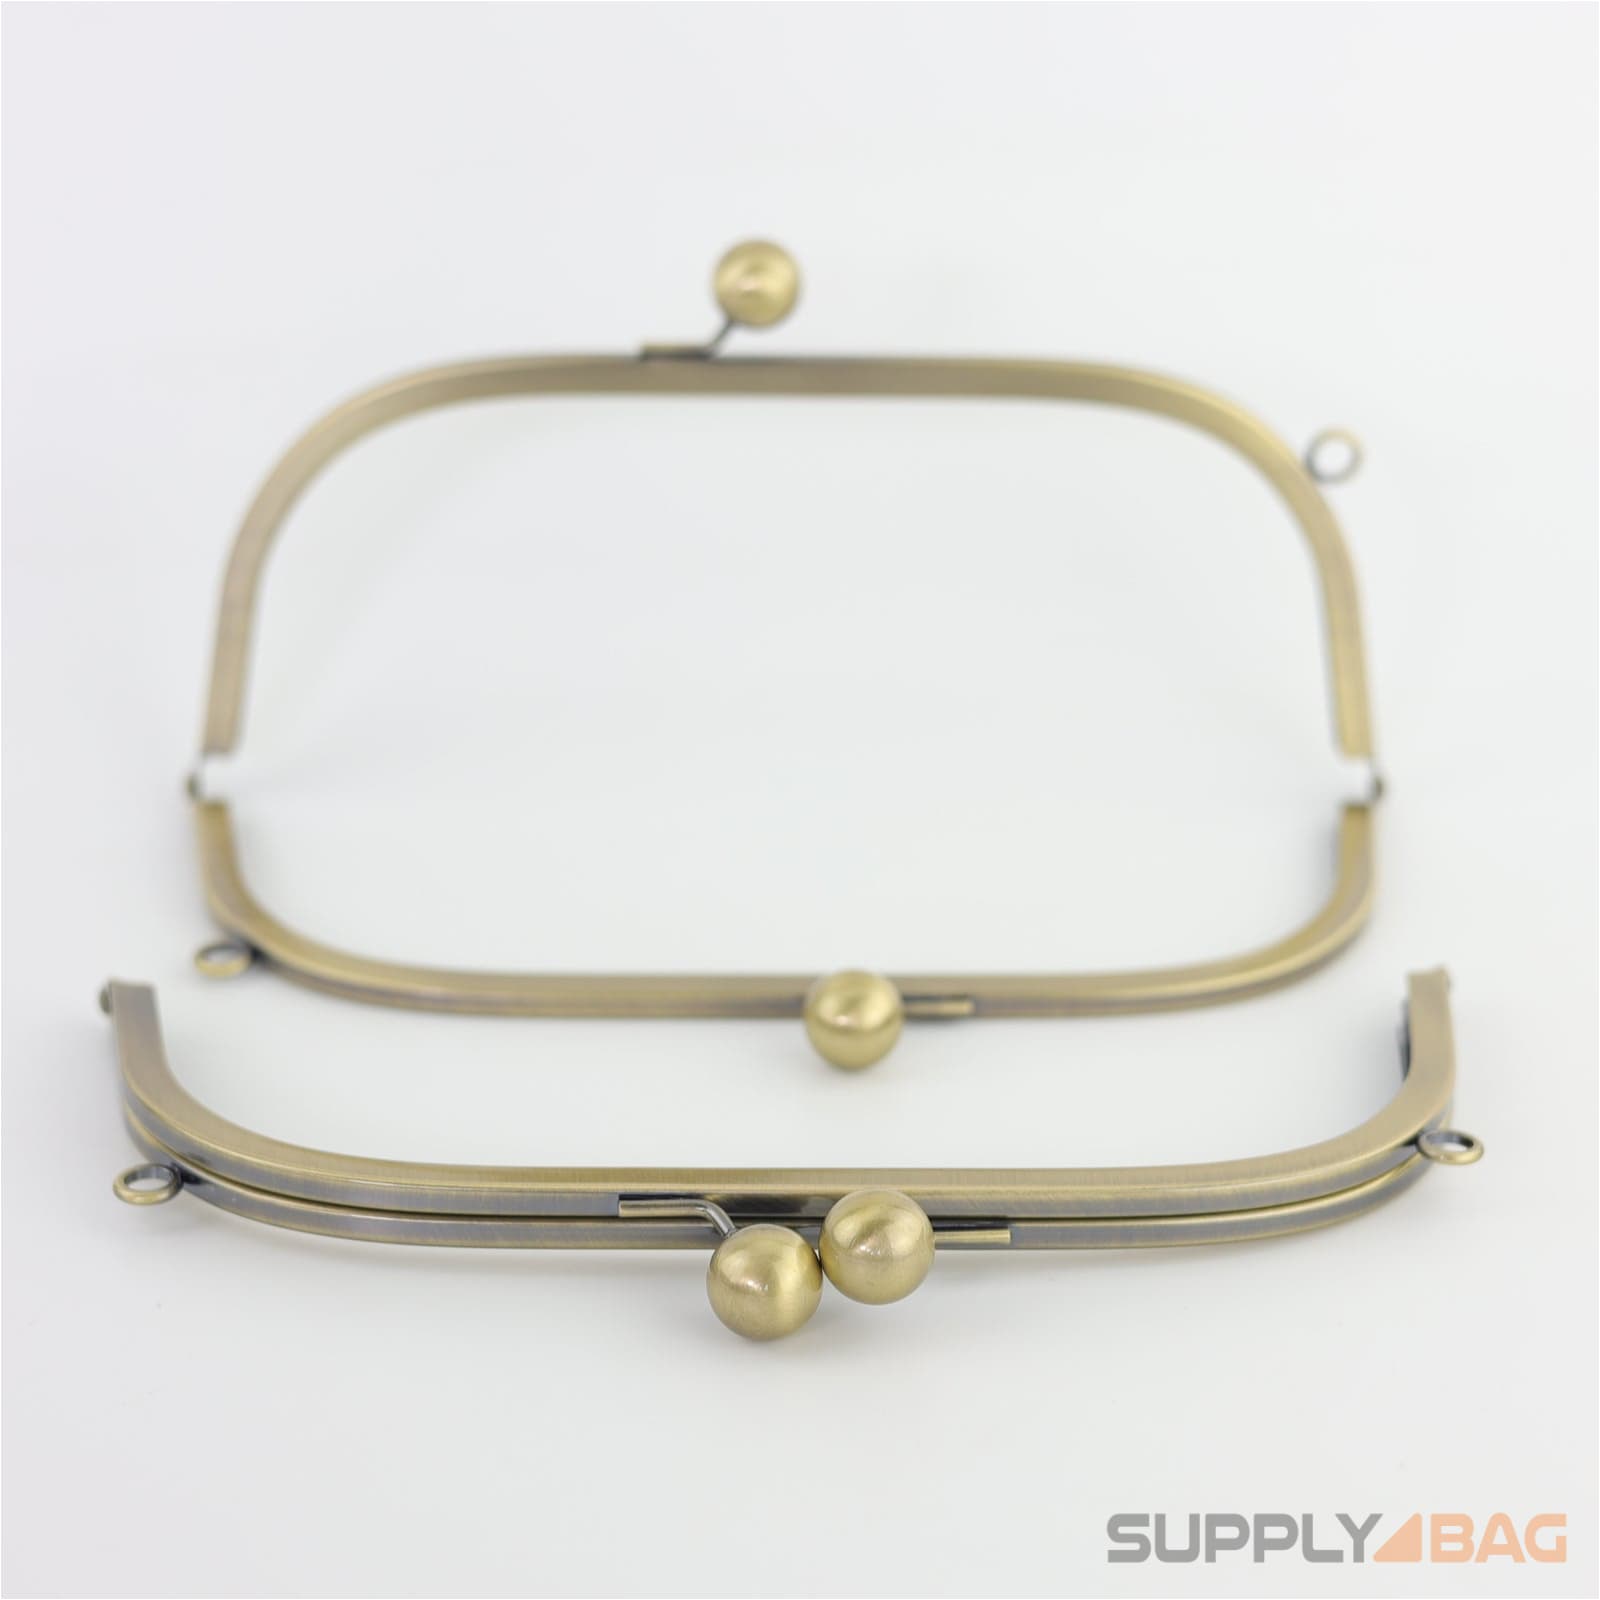 10 x 4 inch - ball clasp - antique brass arch shape metal purse frame